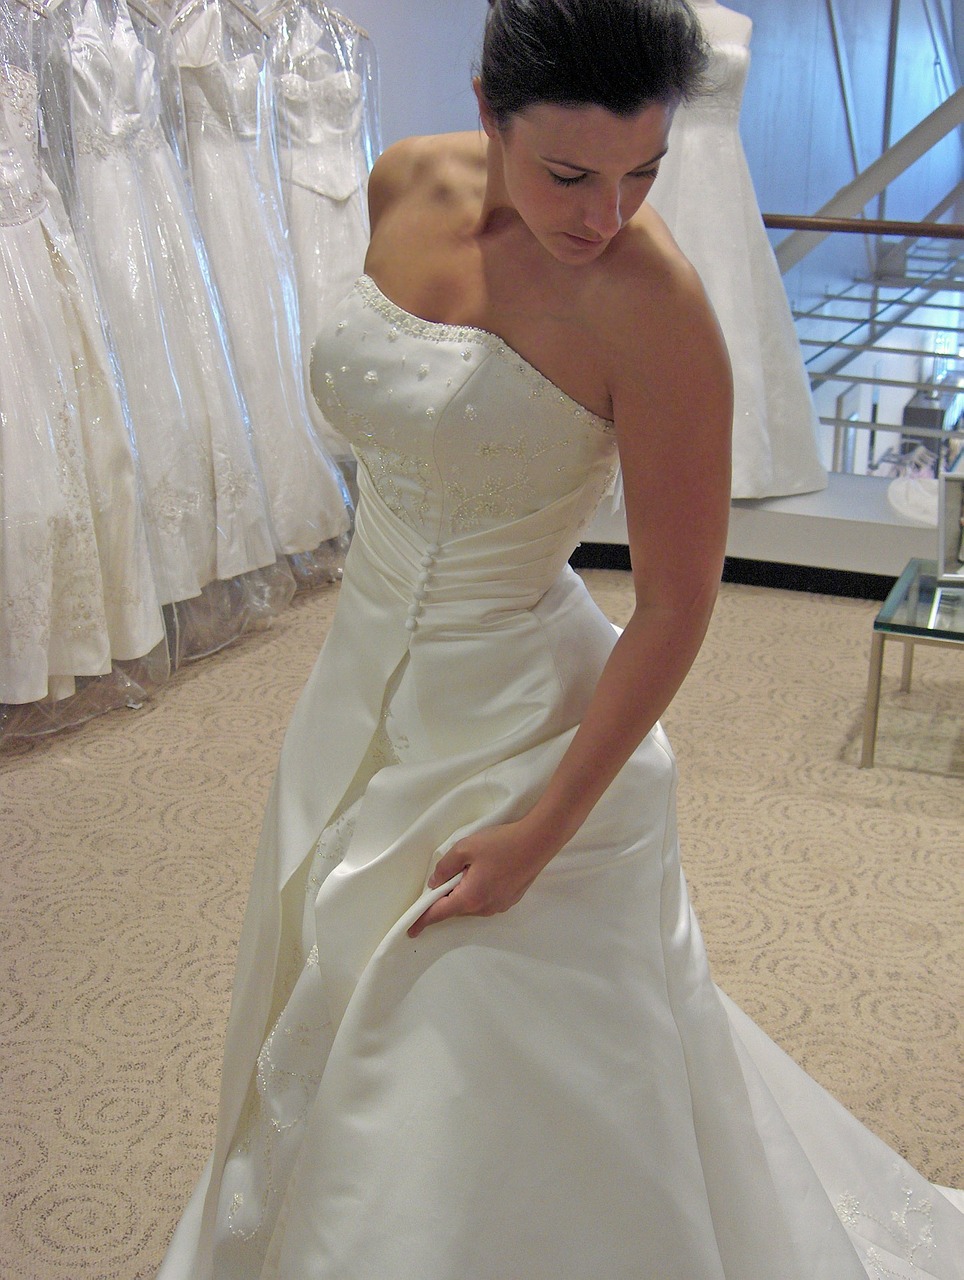 Wedding dress undergarment guide